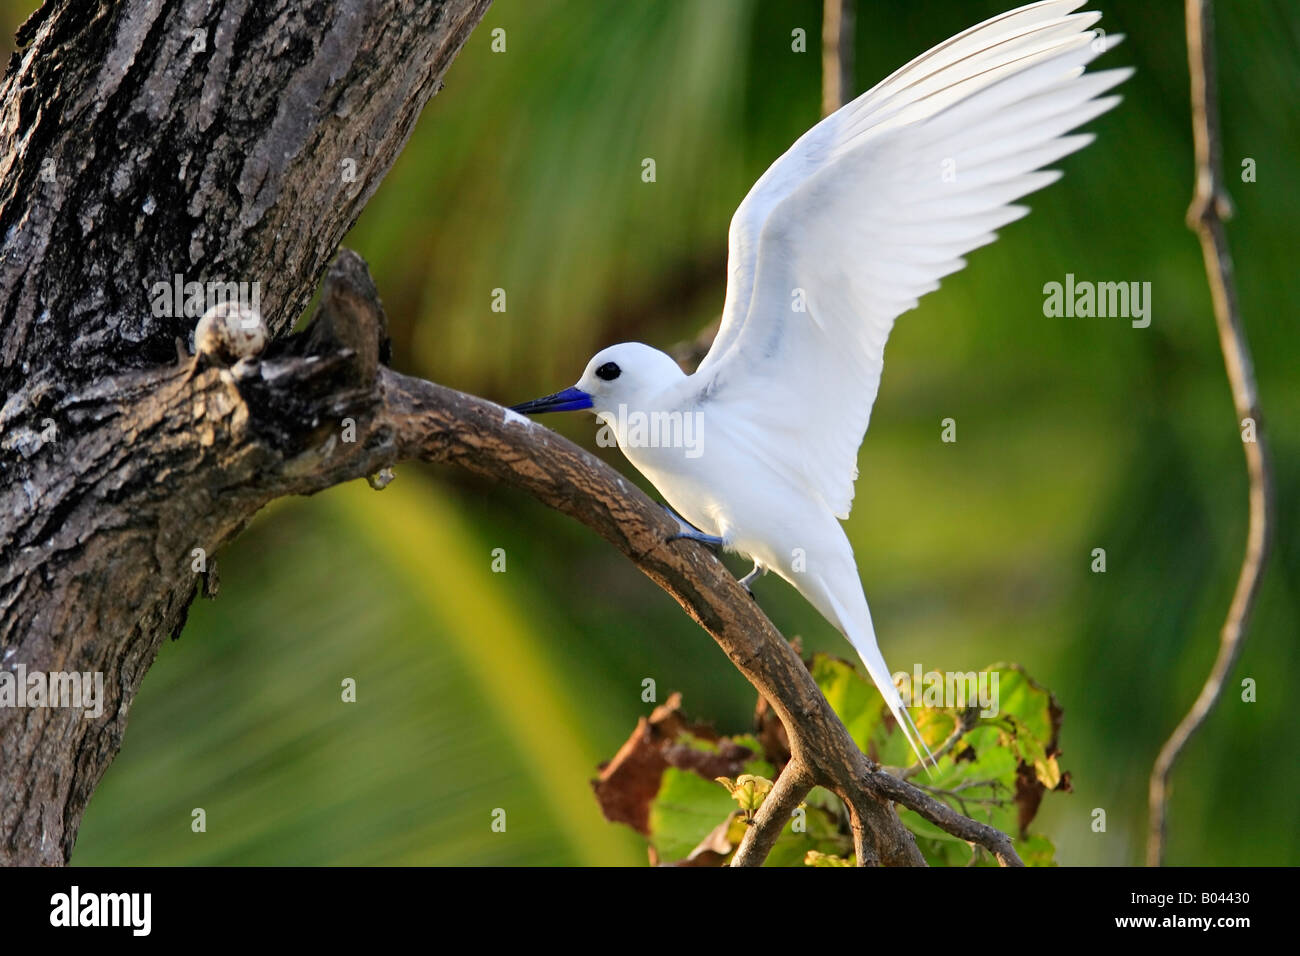 Feenseeschwalbe gygis alba white tern bird island seychellen Foto Stock